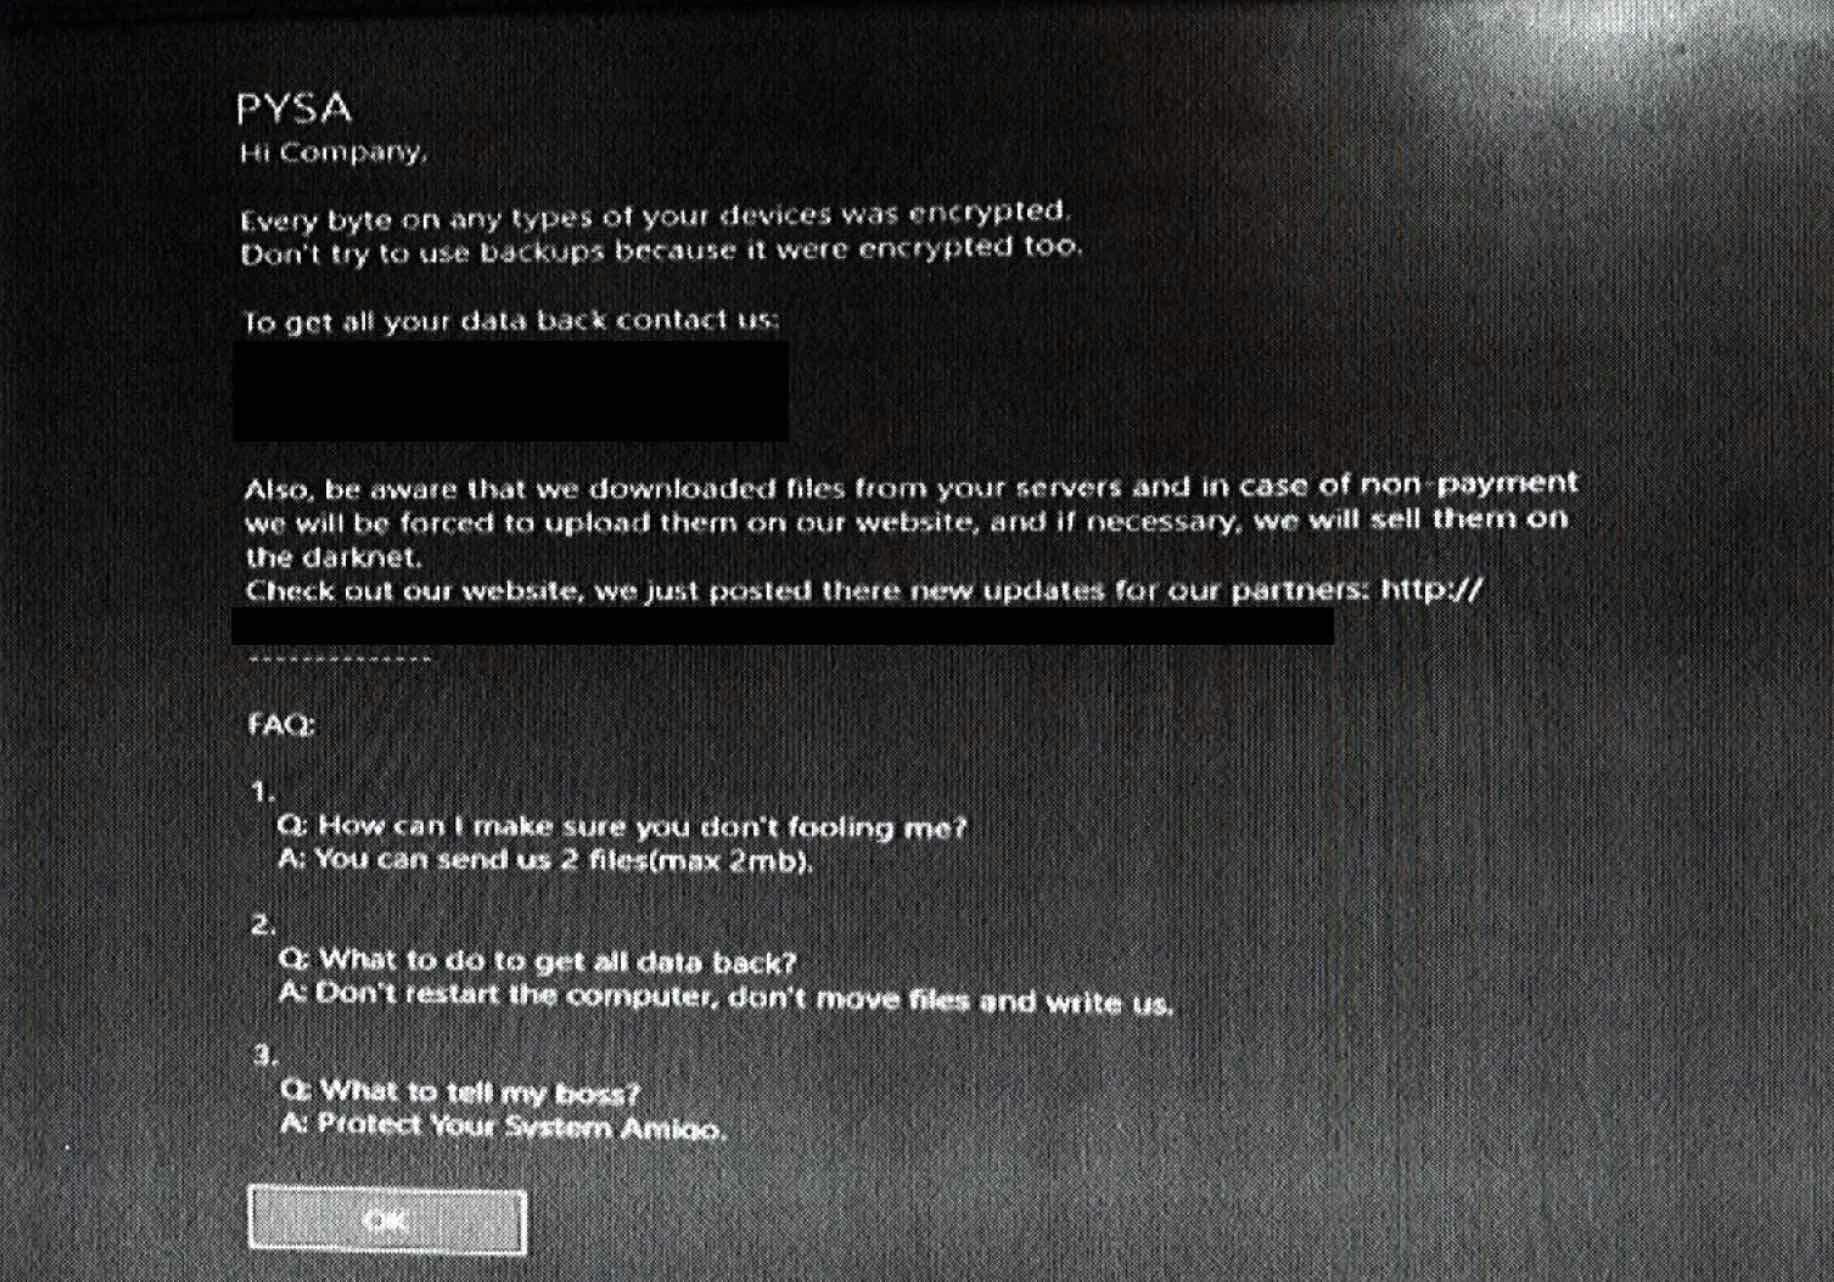 psya ransomware message on computer screen